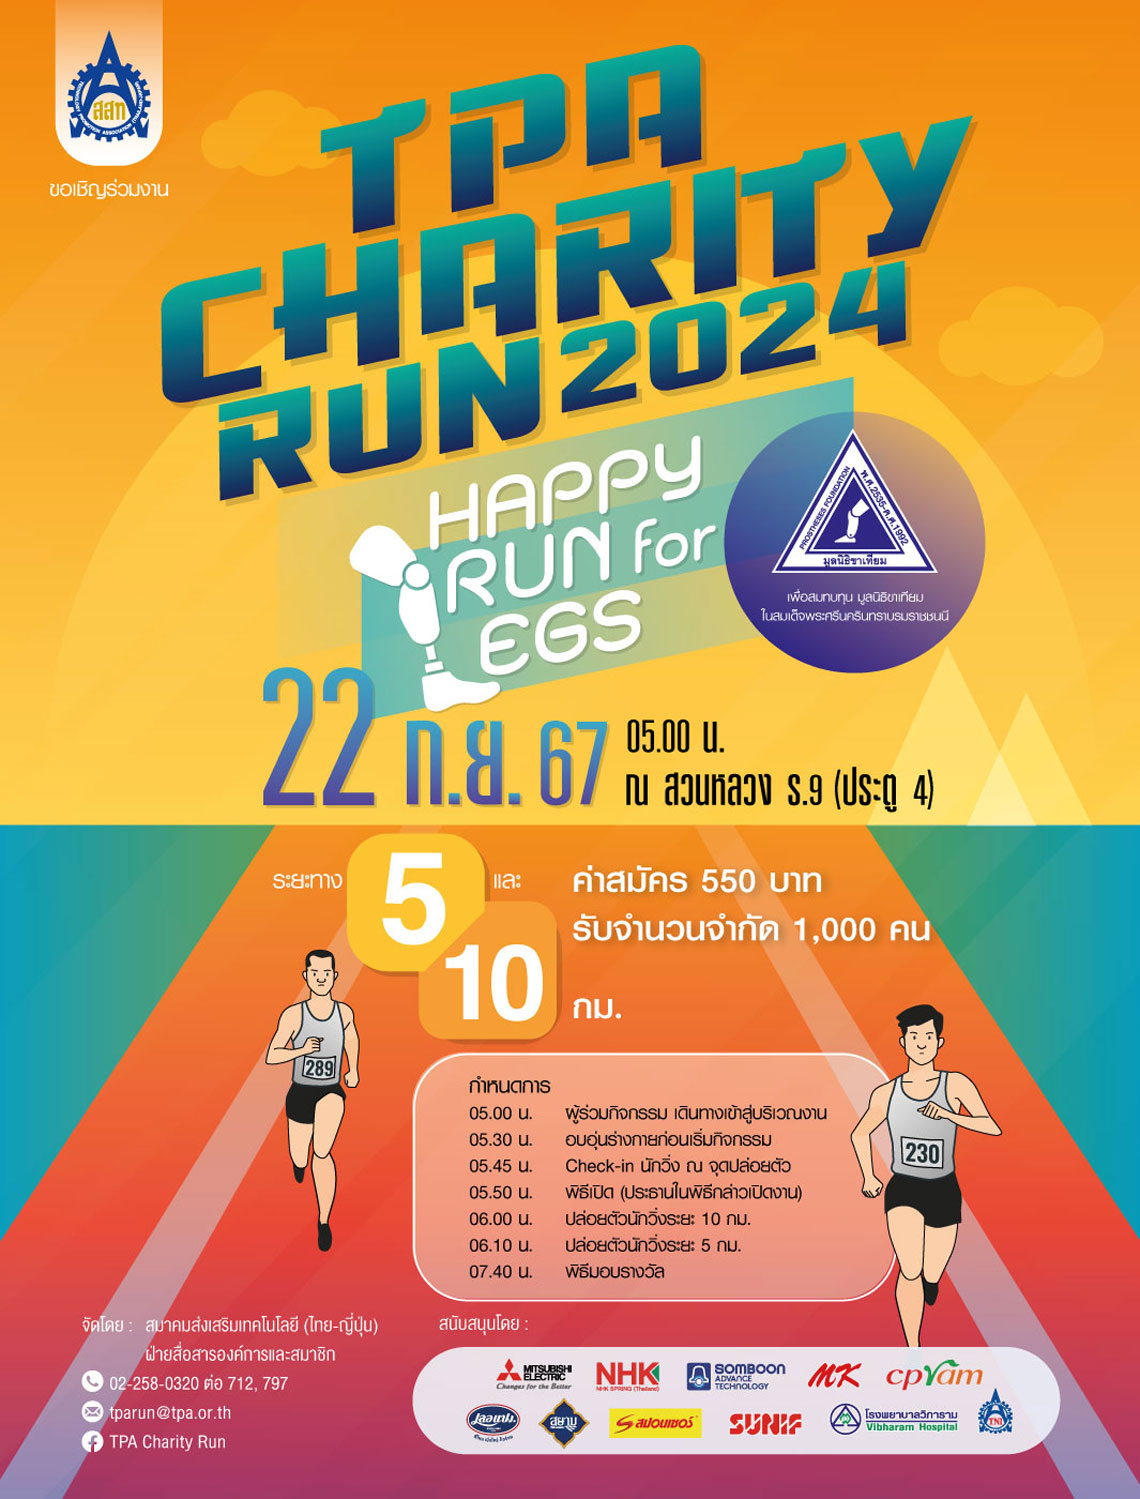 TPA Charity Run2024 Happy Run For Legs